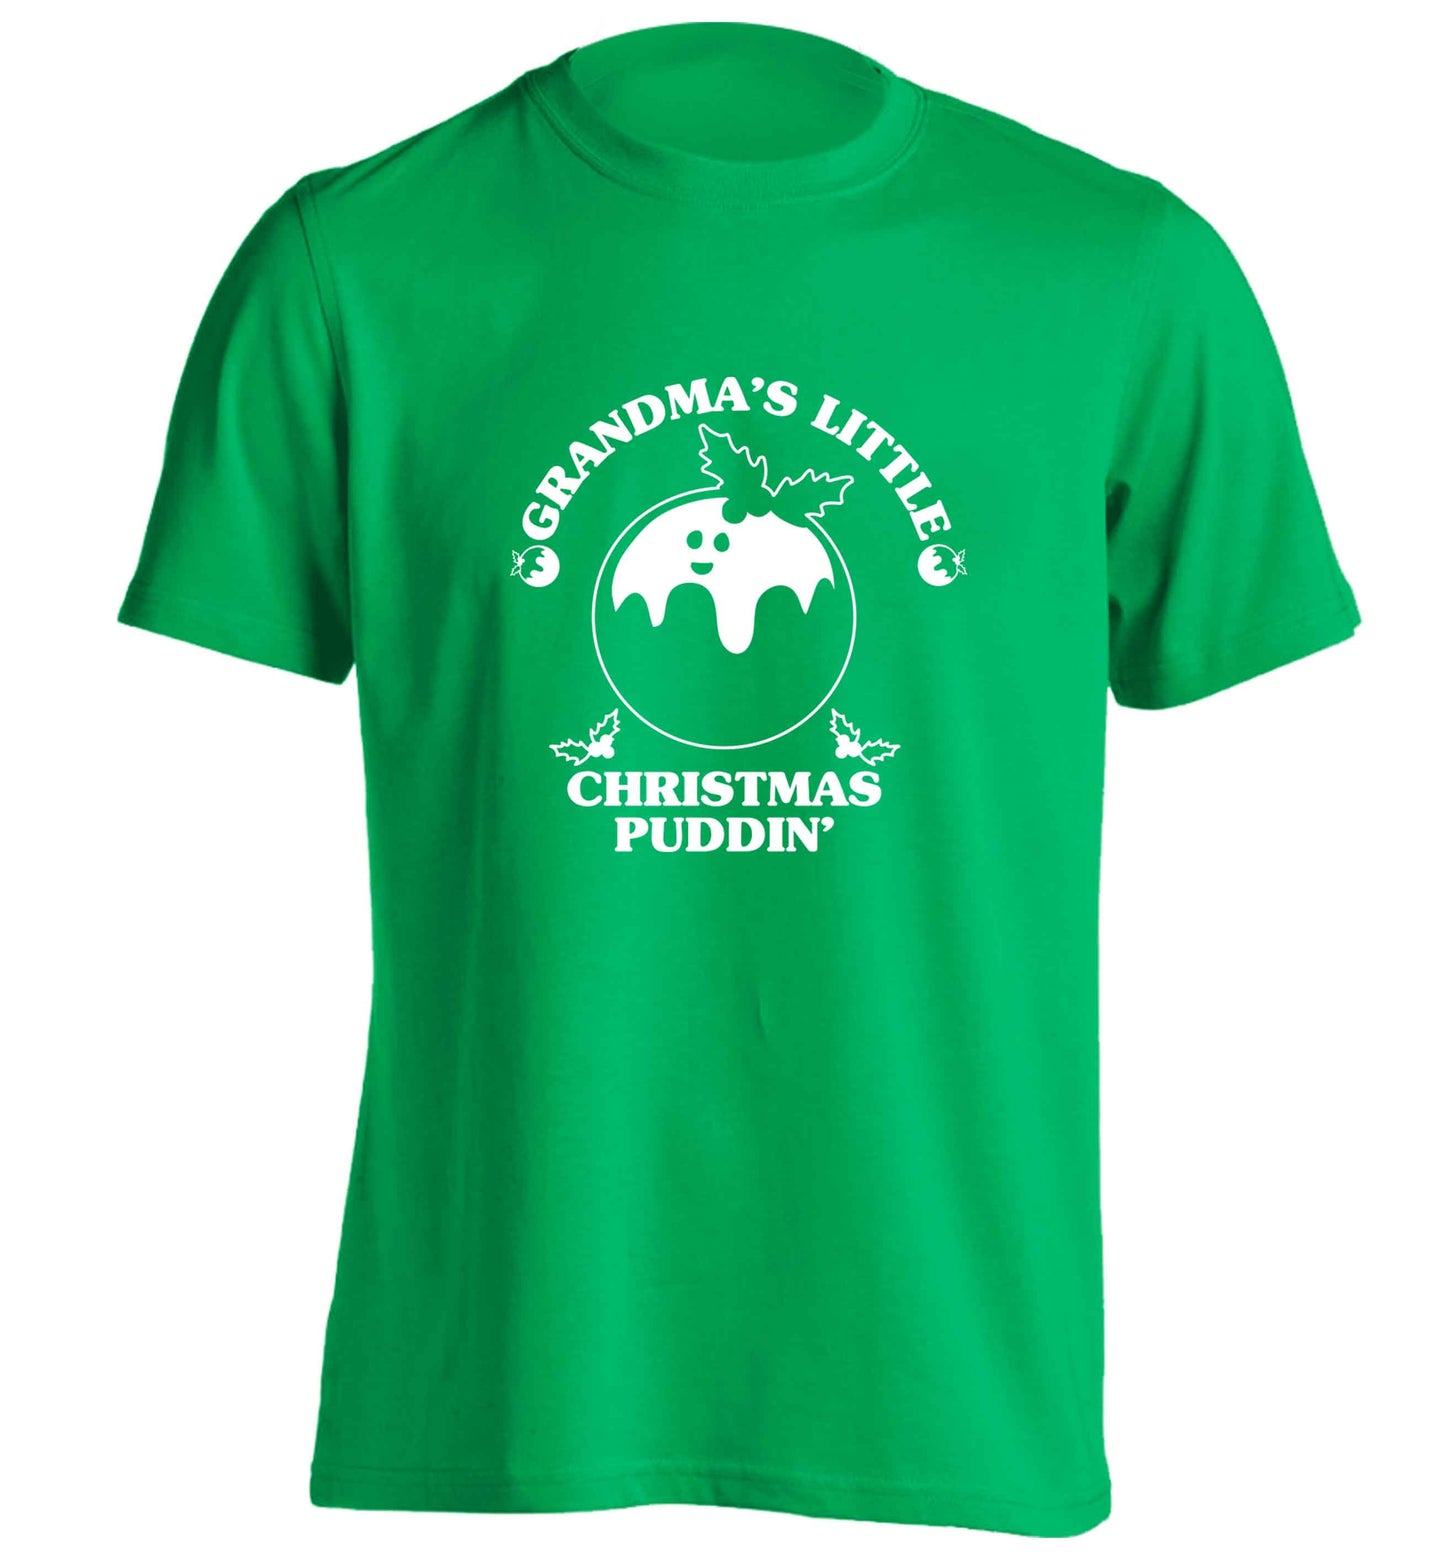 Grandma's little Christmas puddin' adults unisex green Tshirt 2XL